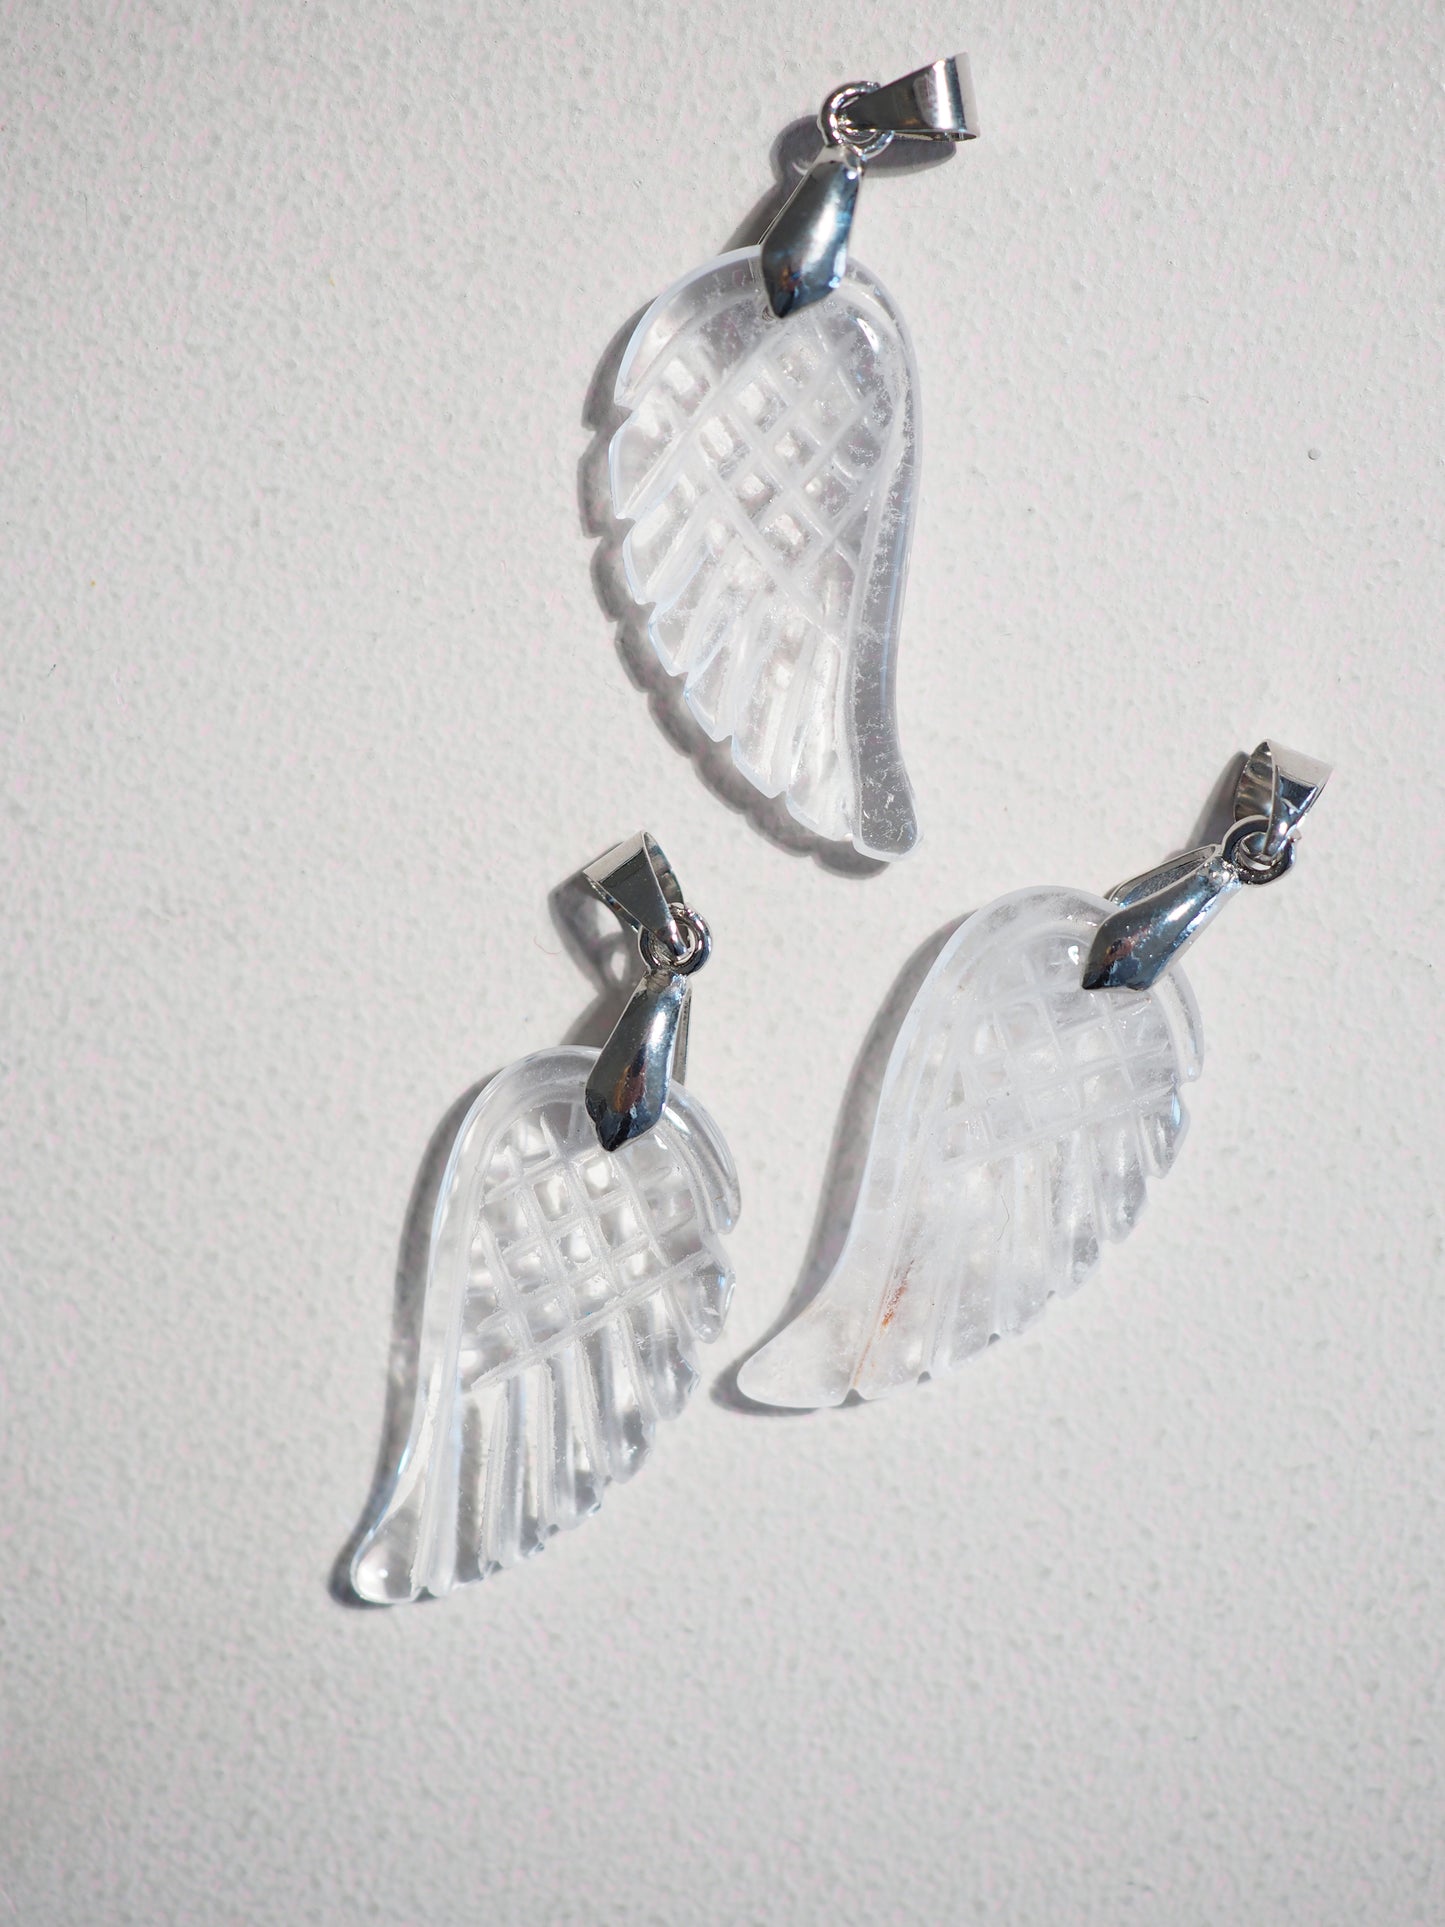 Bergkristall Engel Flügel Anhänger . Clear Quartz Angel Wing Pendant - aus China HIGH QUALITY